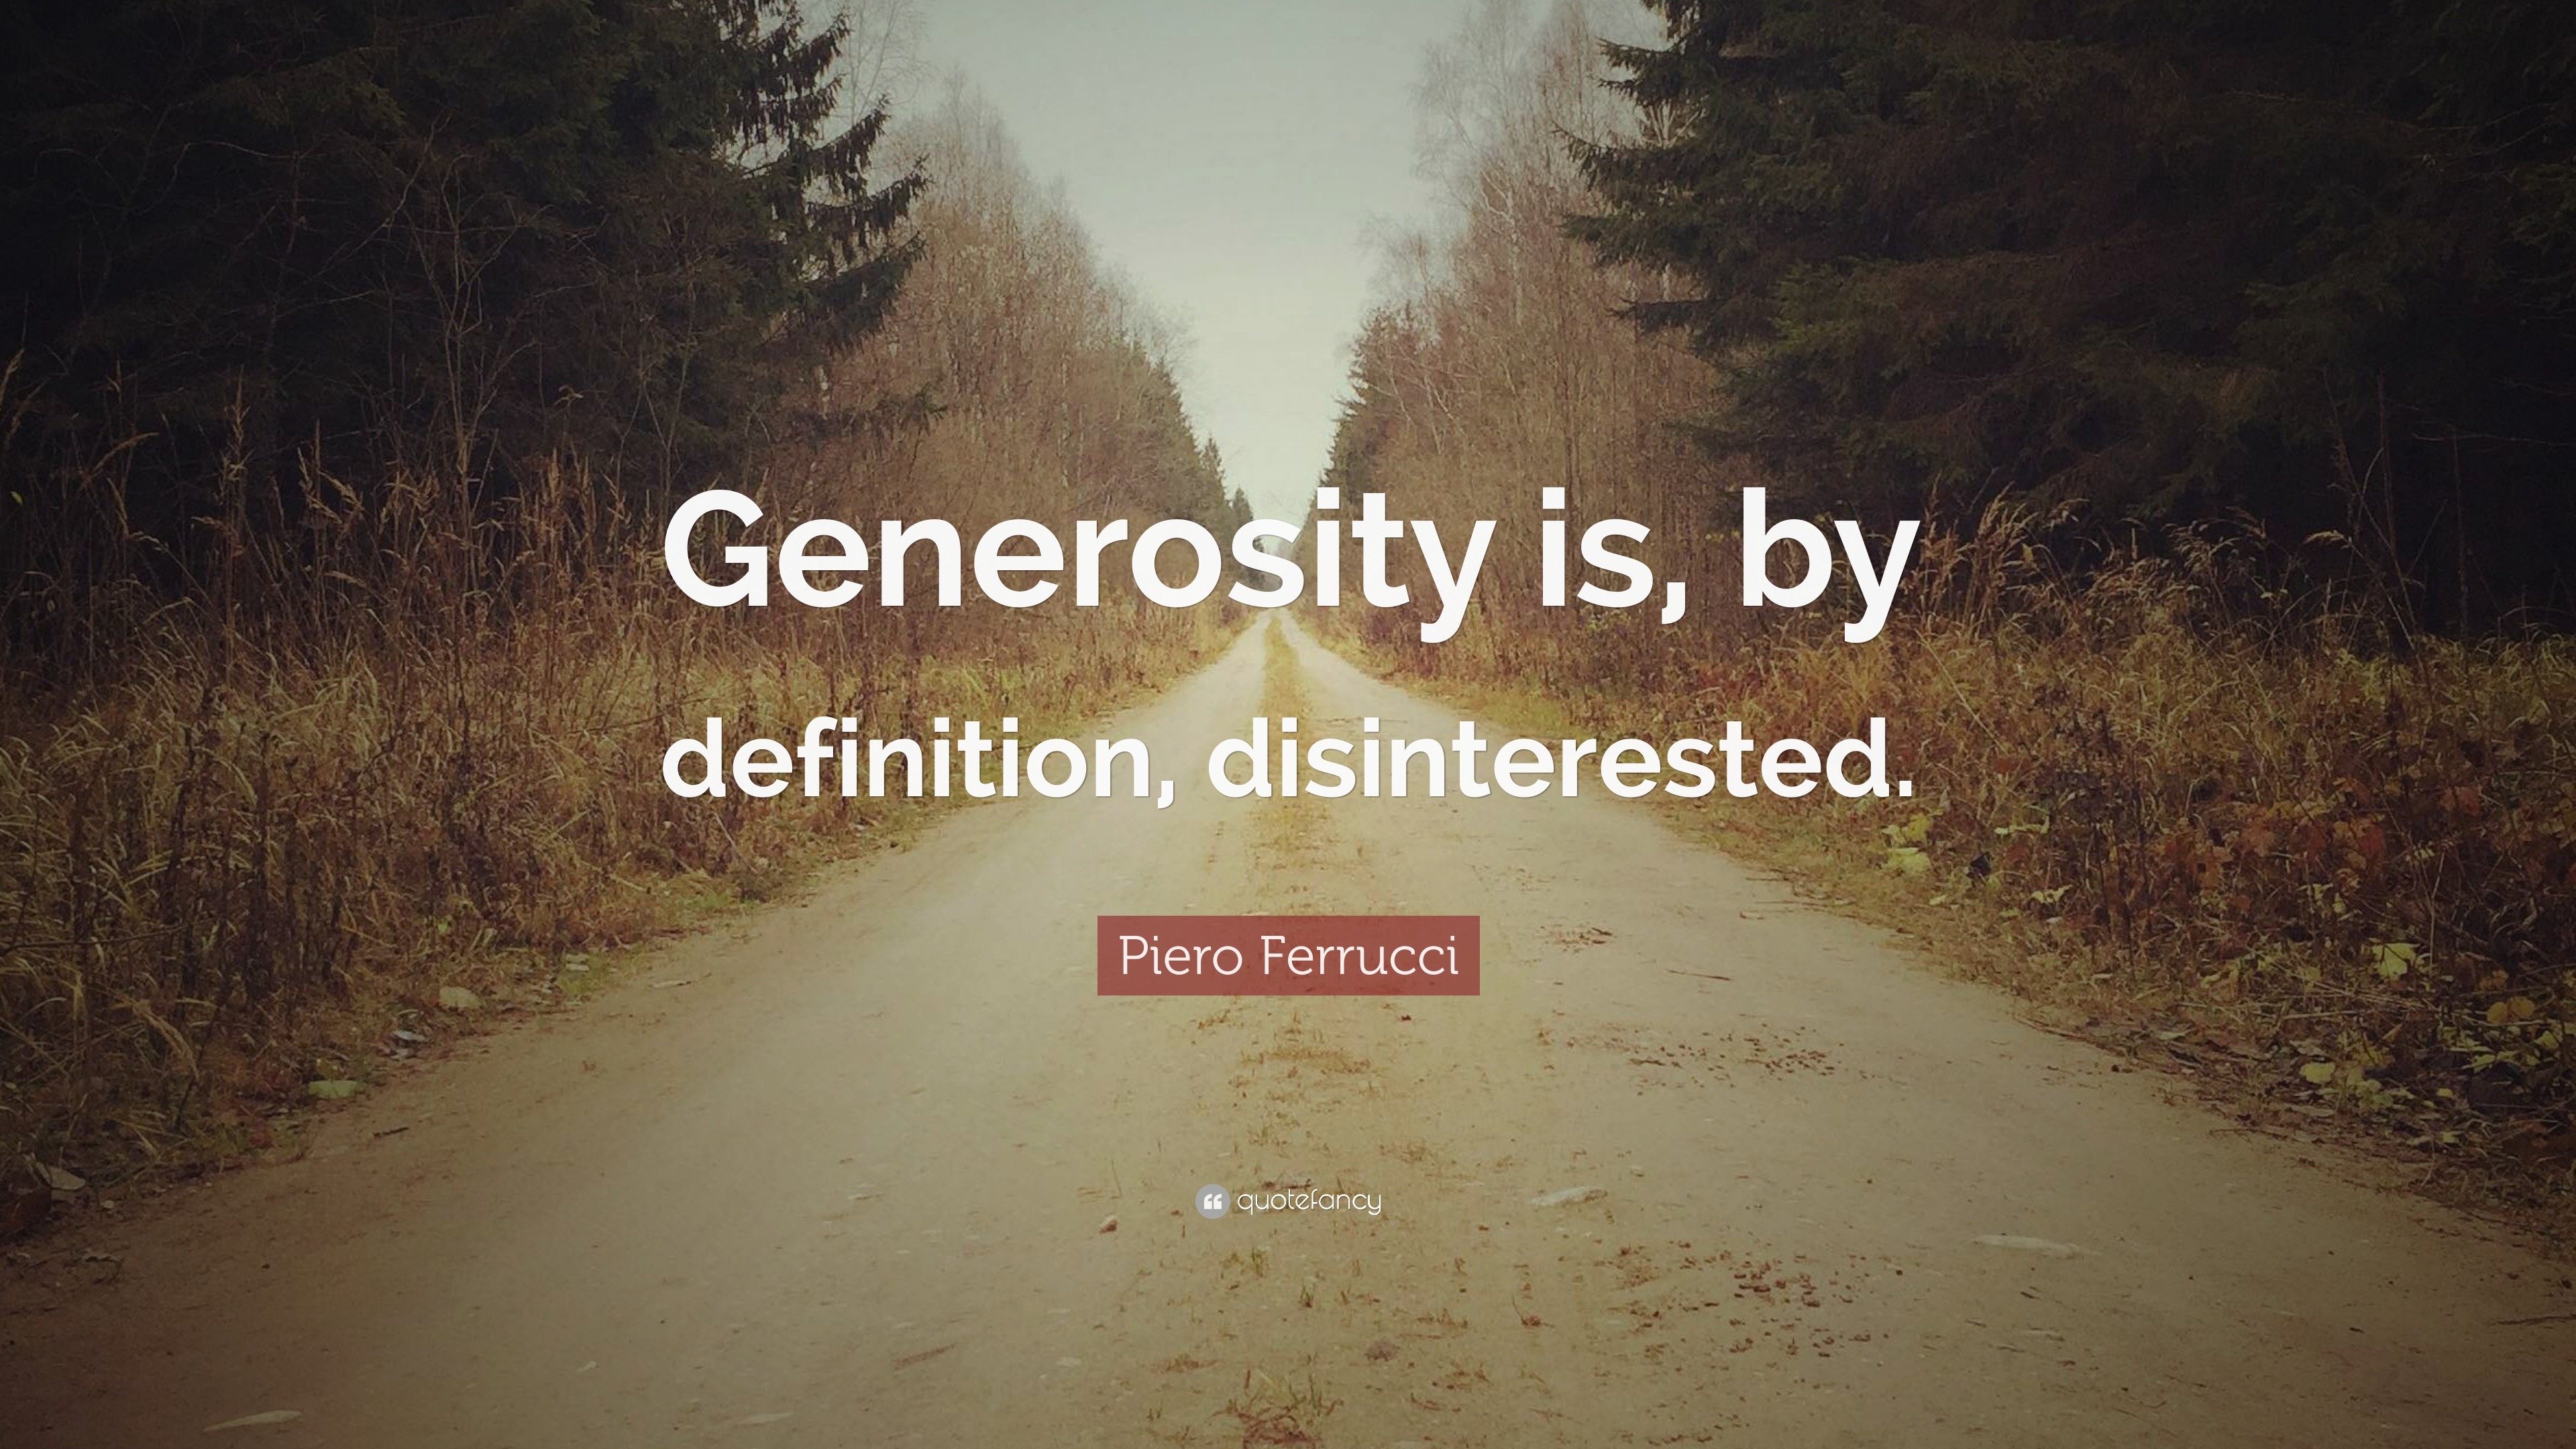 piero ferrucci quote: “generosity is, by definition, disinterested